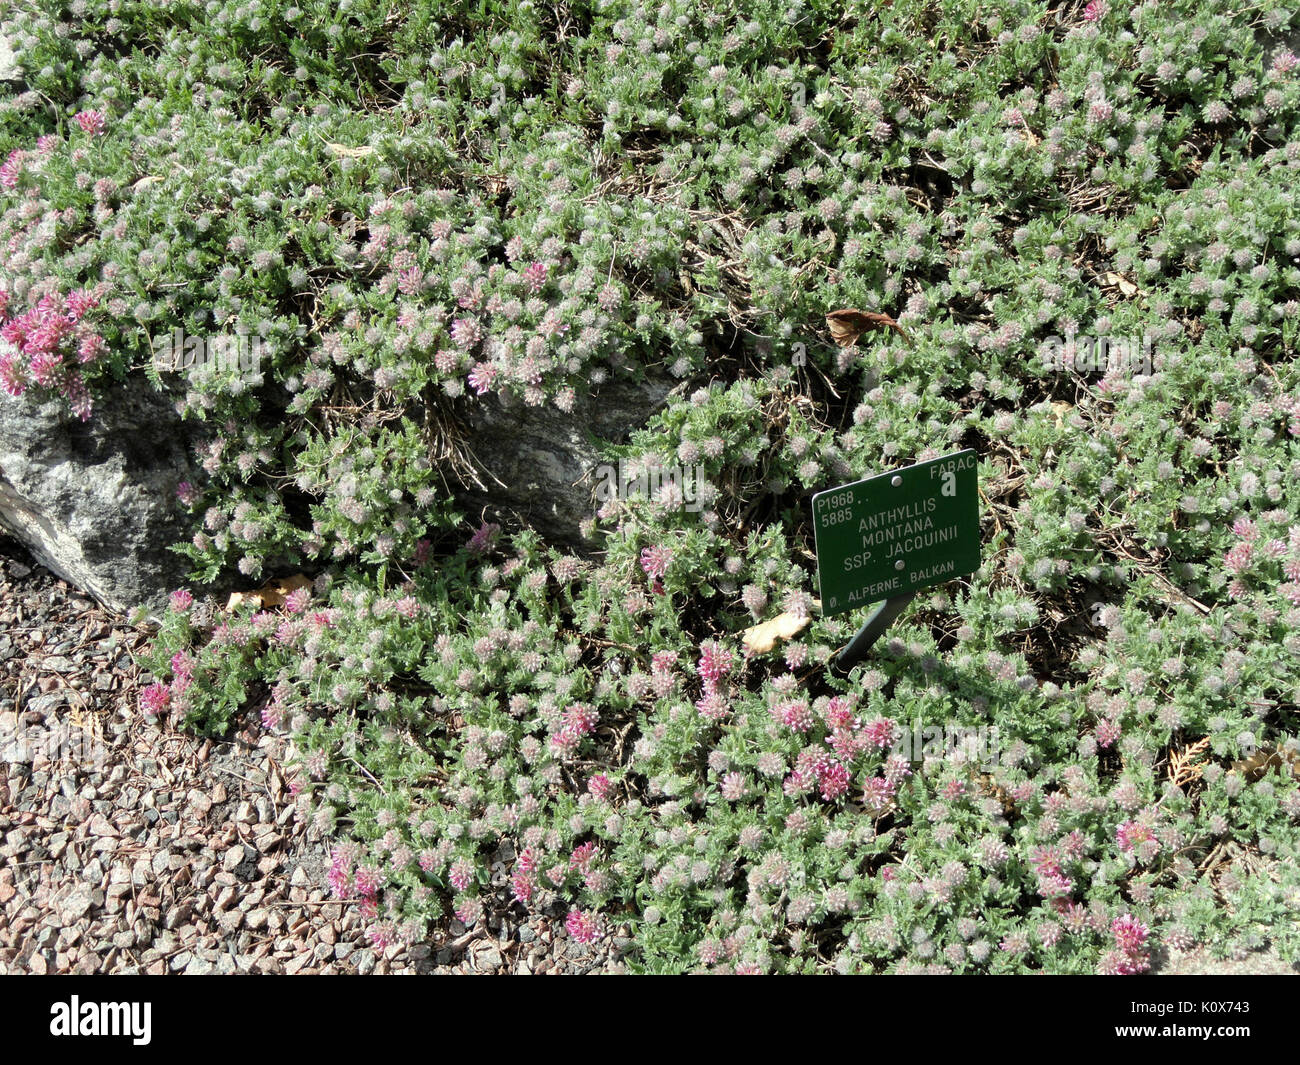 Anthyllis montana subsp. jacquinii   Copenhagen Botanical Garden   DSC07458 Stock Photo